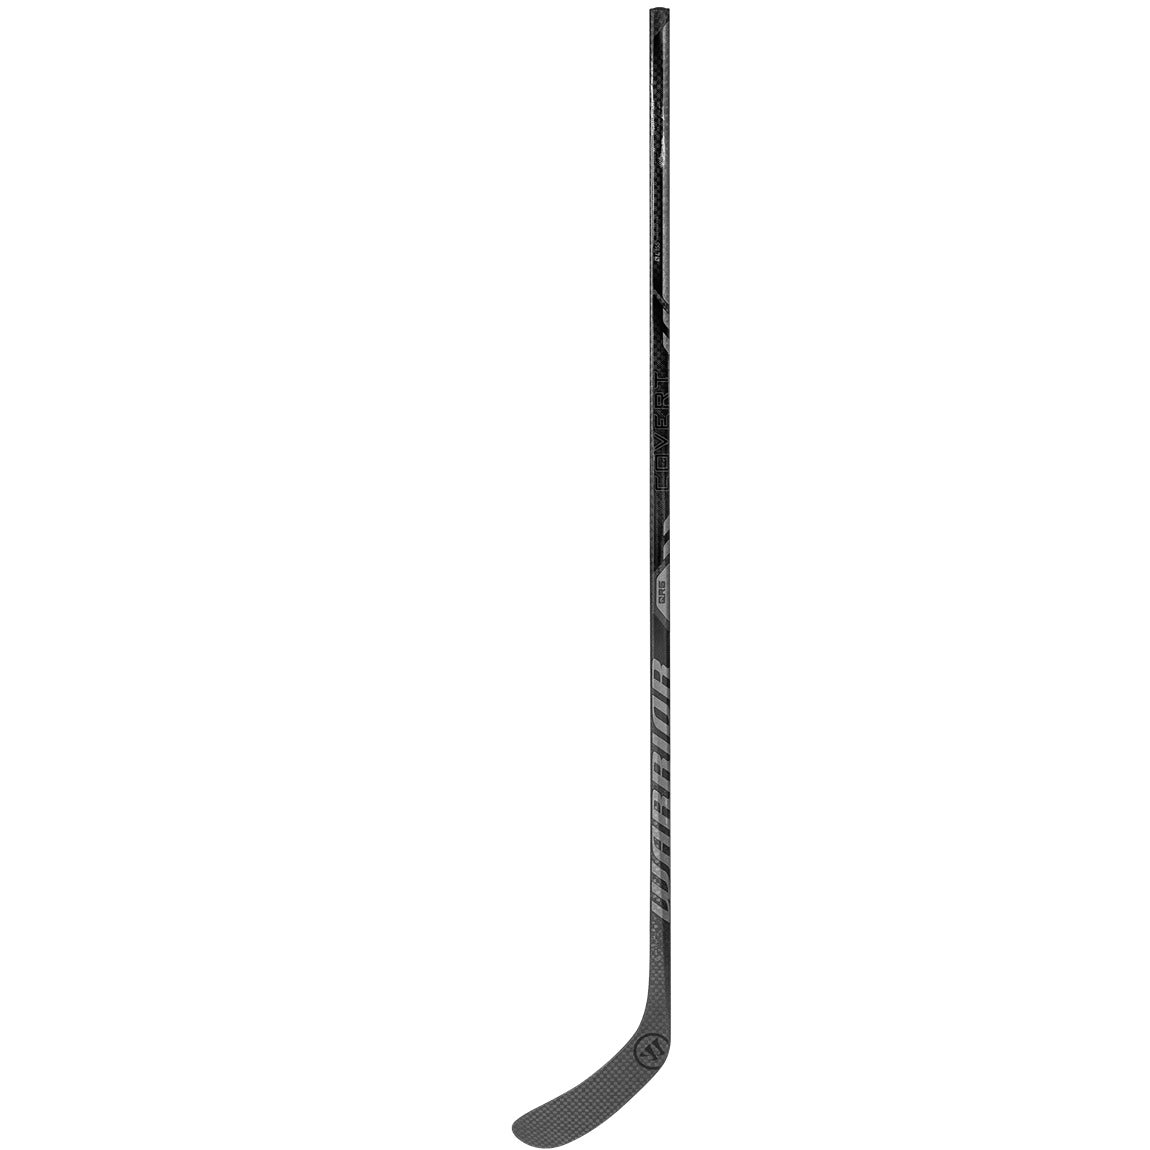 Warrior Covert QR6 Hockey Stick - Intermediate